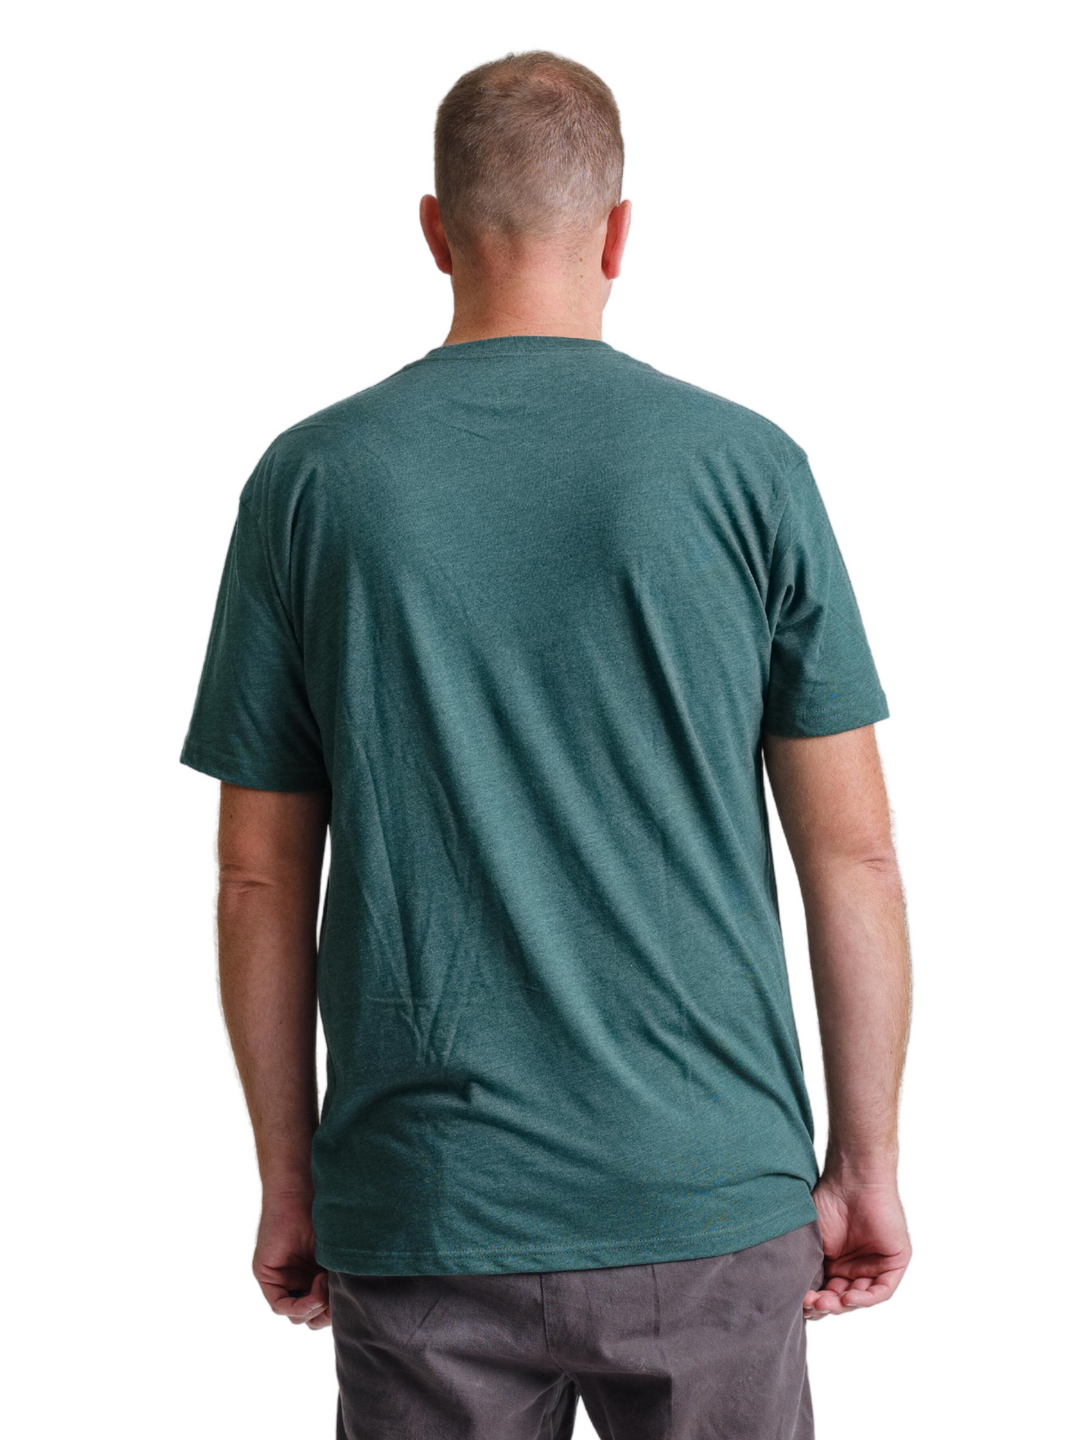 Nudge Printing green t shirt back